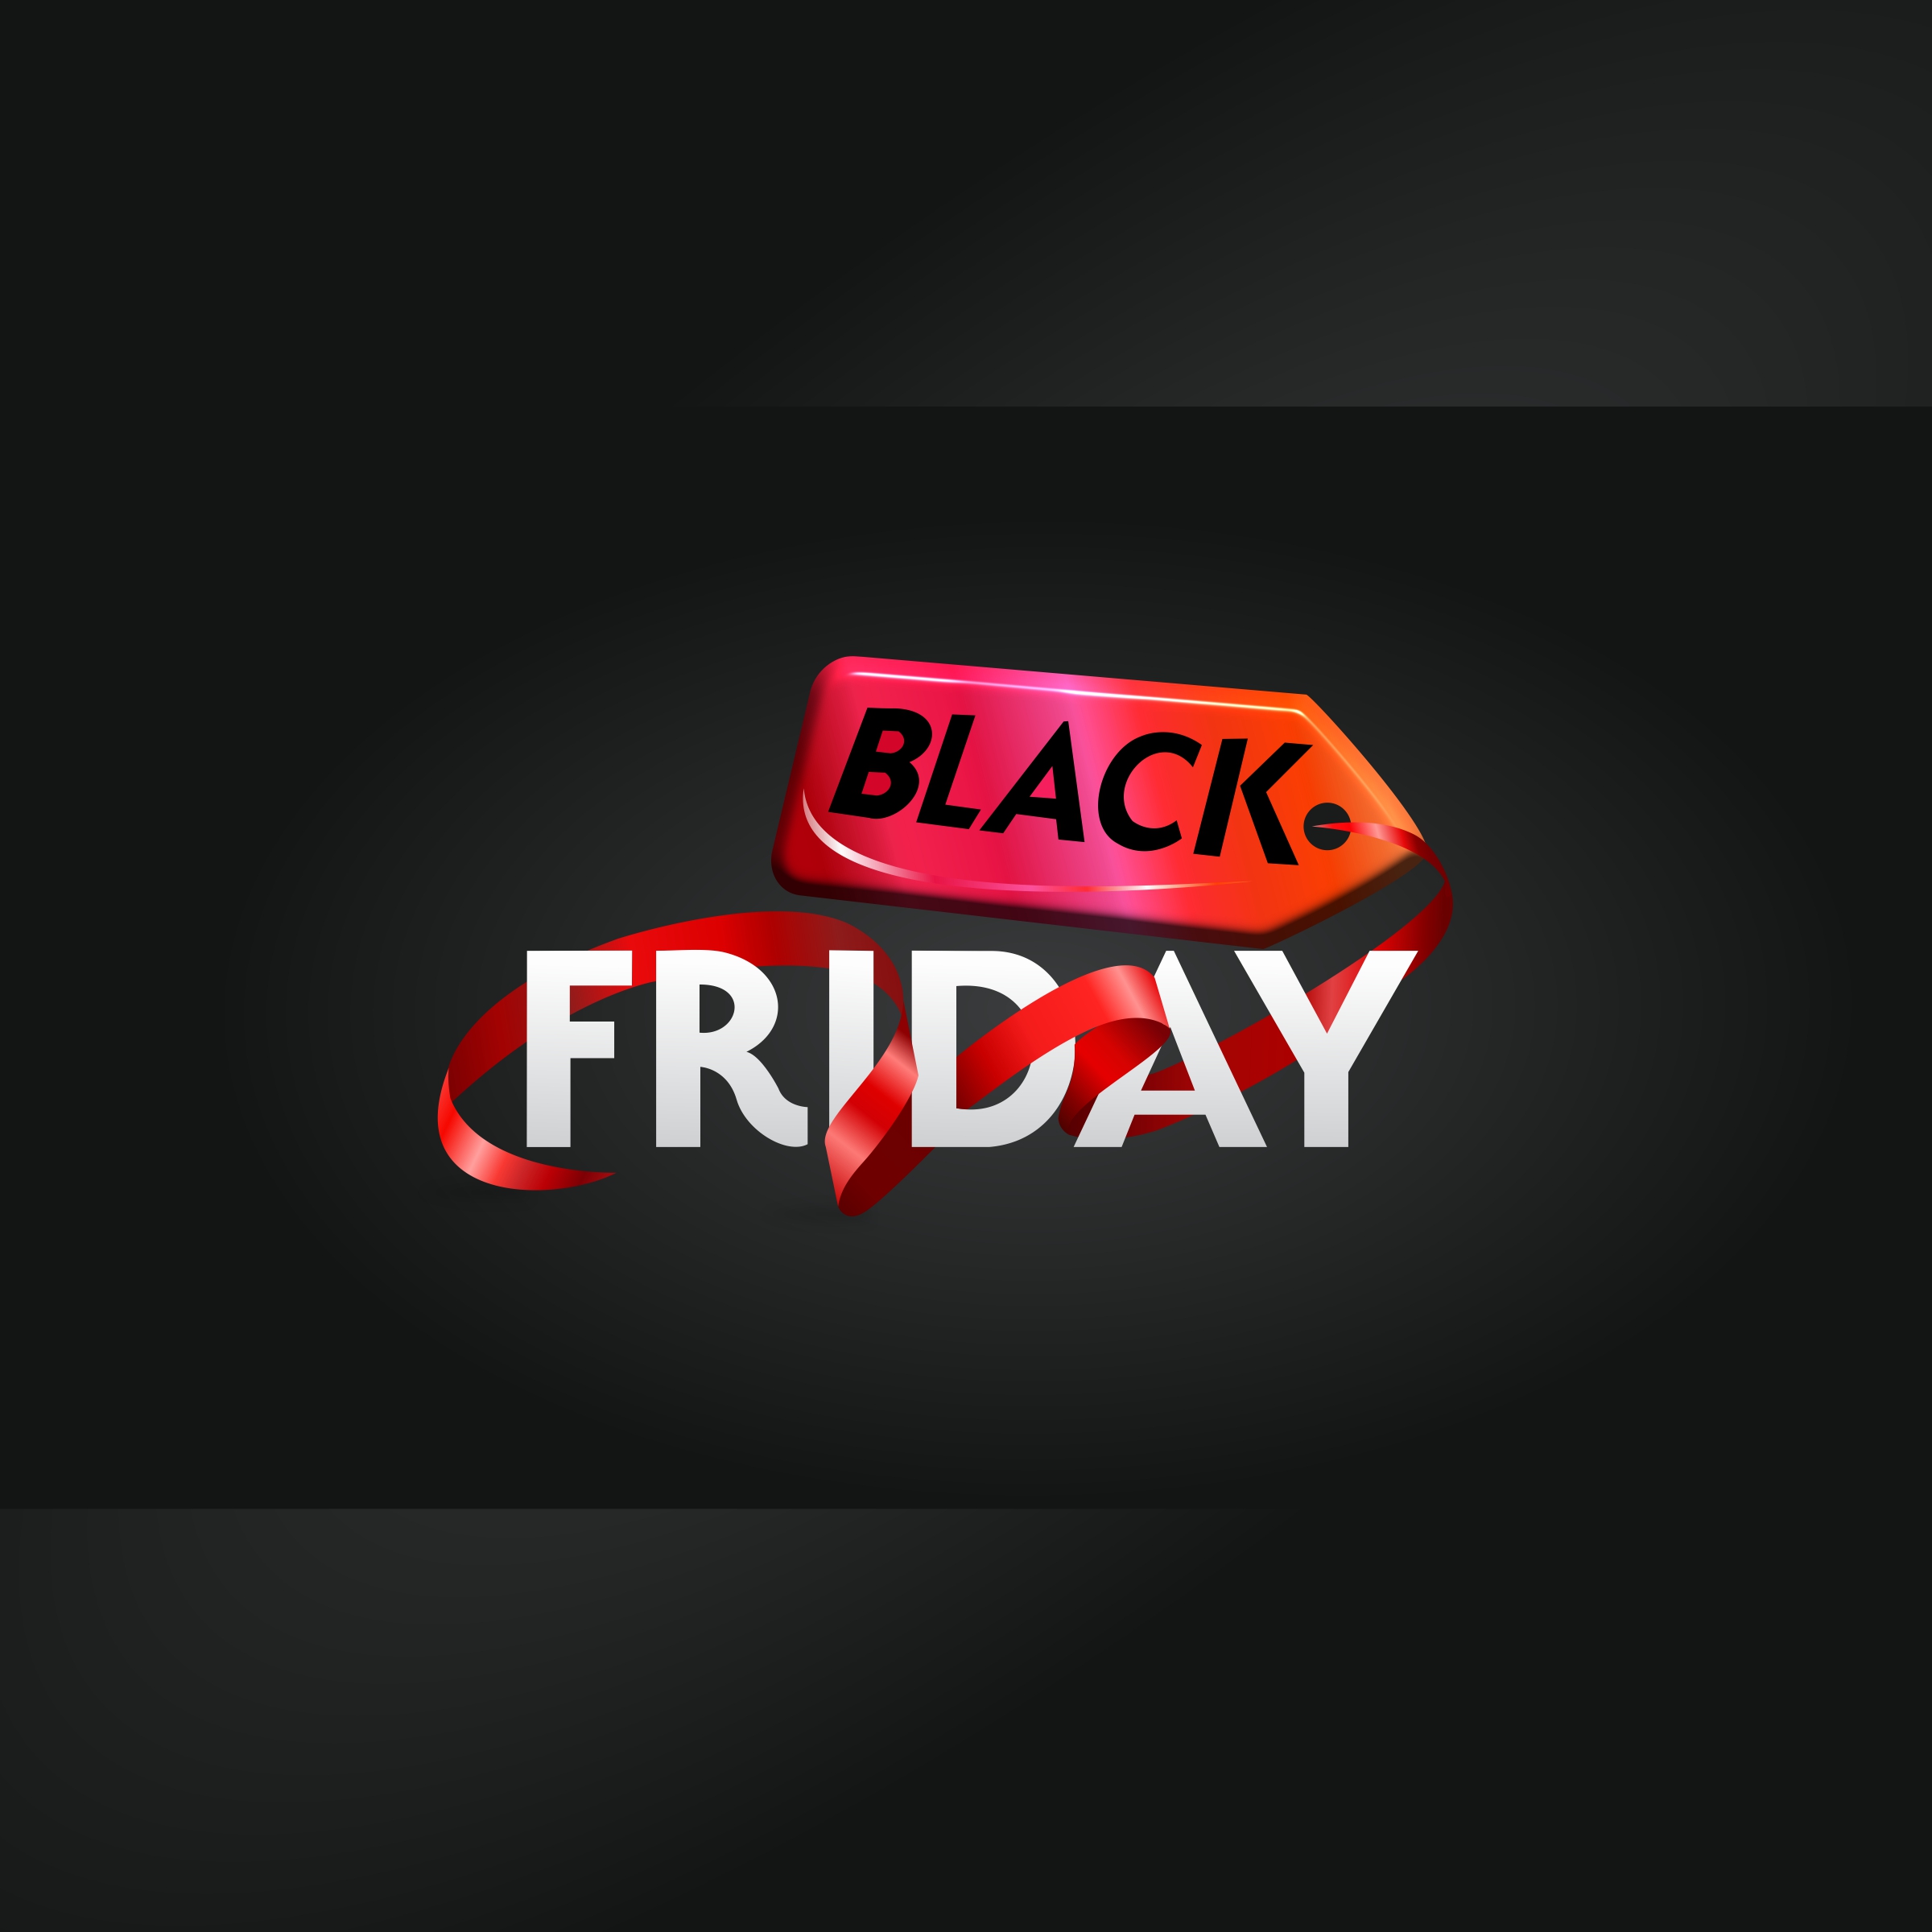 Black Friday sale image , Black Friday free vector image download